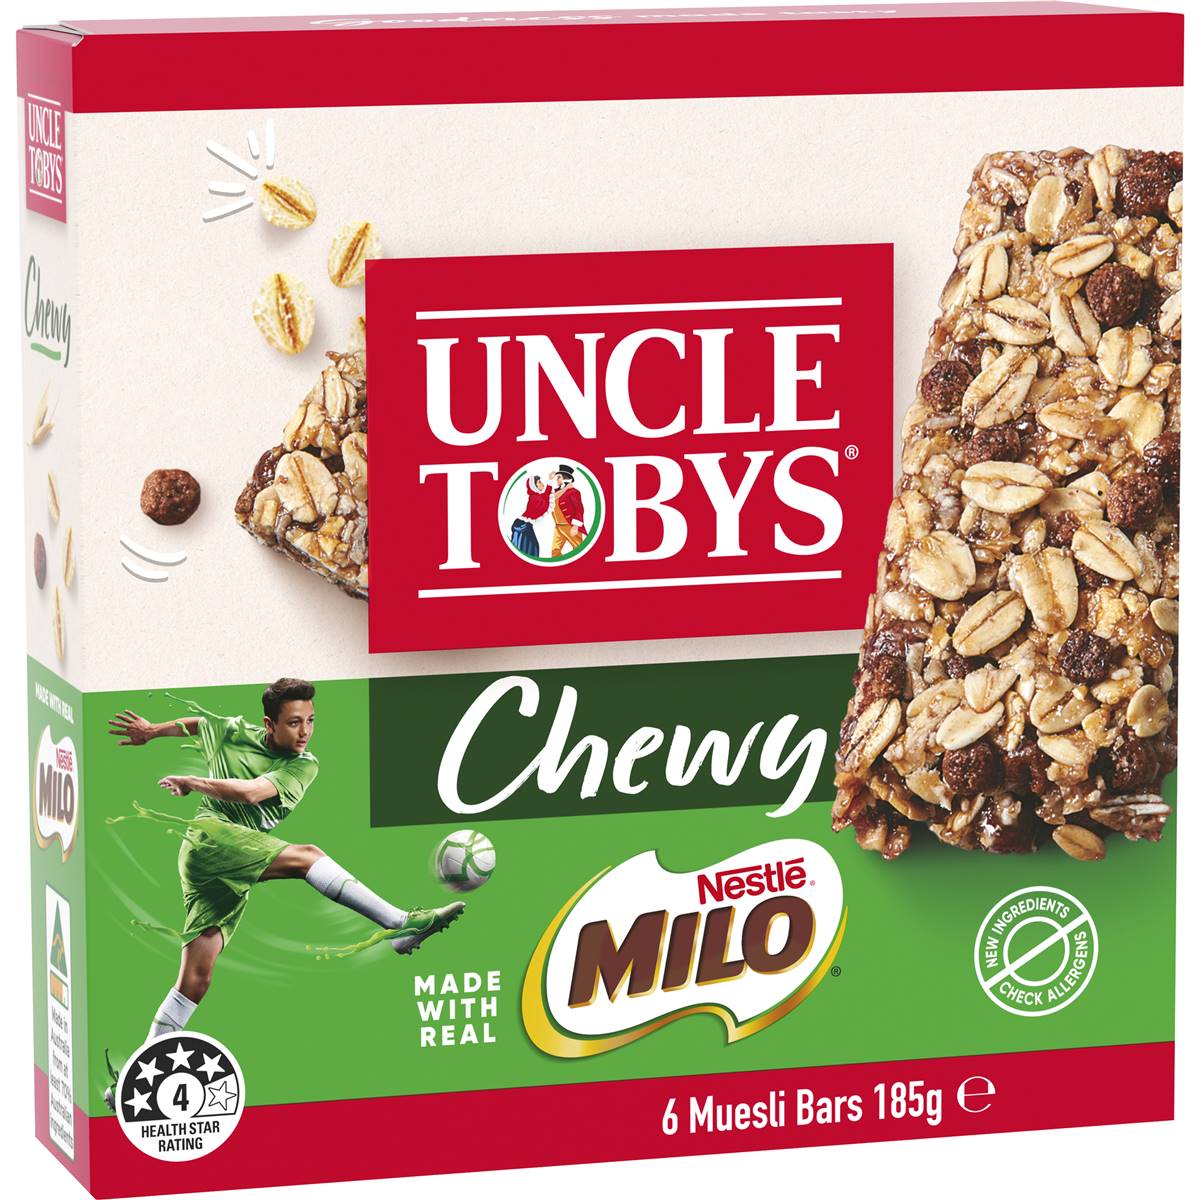 Calories in Uncle Tobys Nestle Milo Chewy Muesli Bars